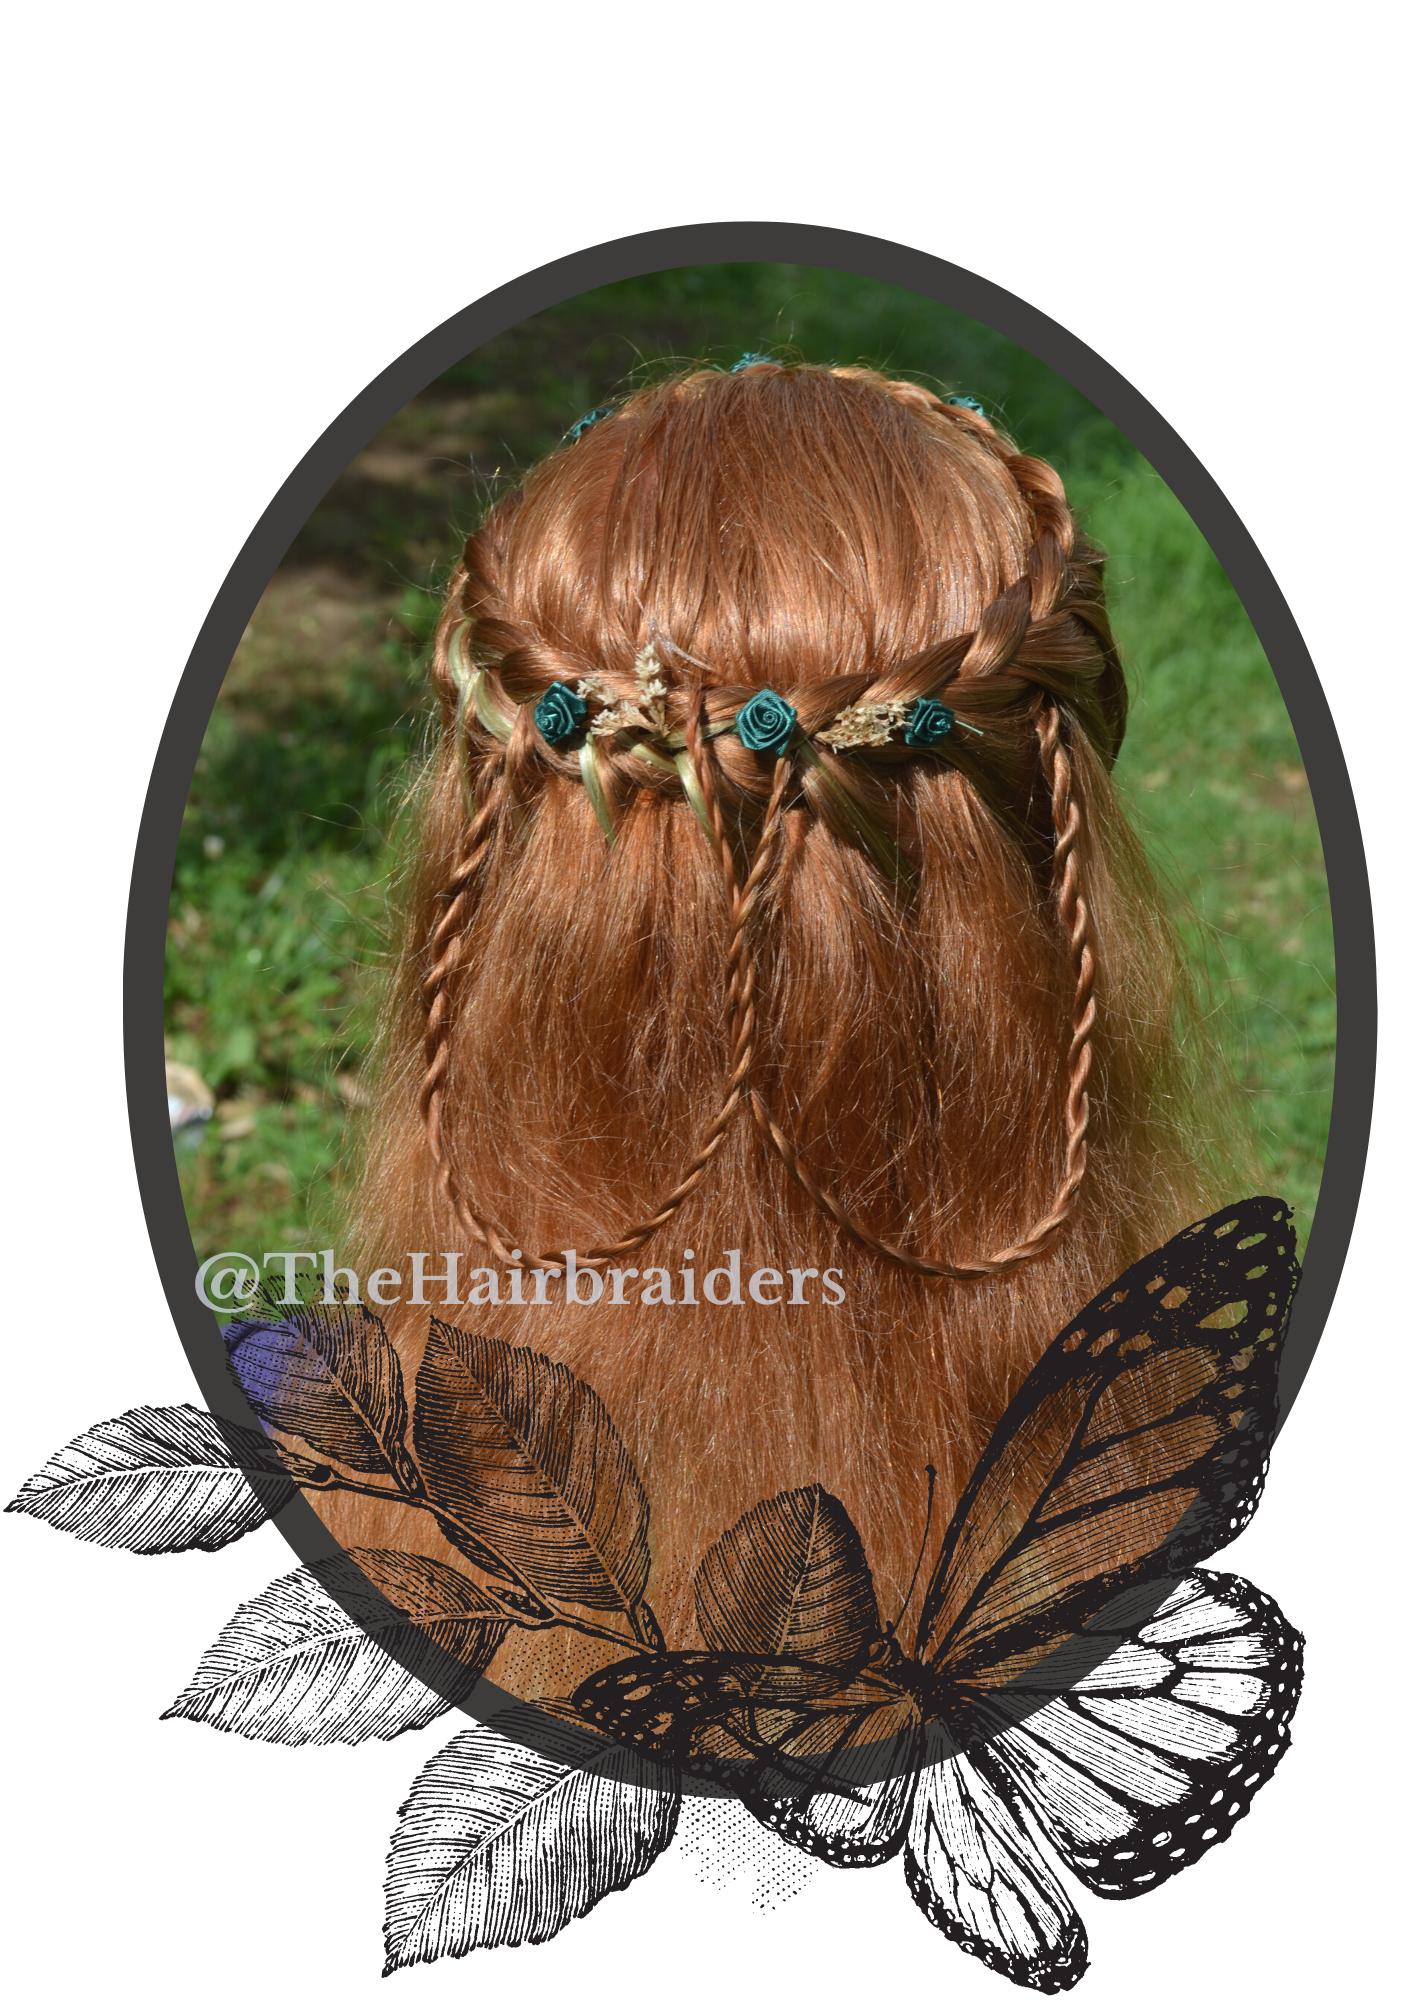 Messy Braid Headband Rapunzel YOUR HAIR COLOR Renaissance Wedding